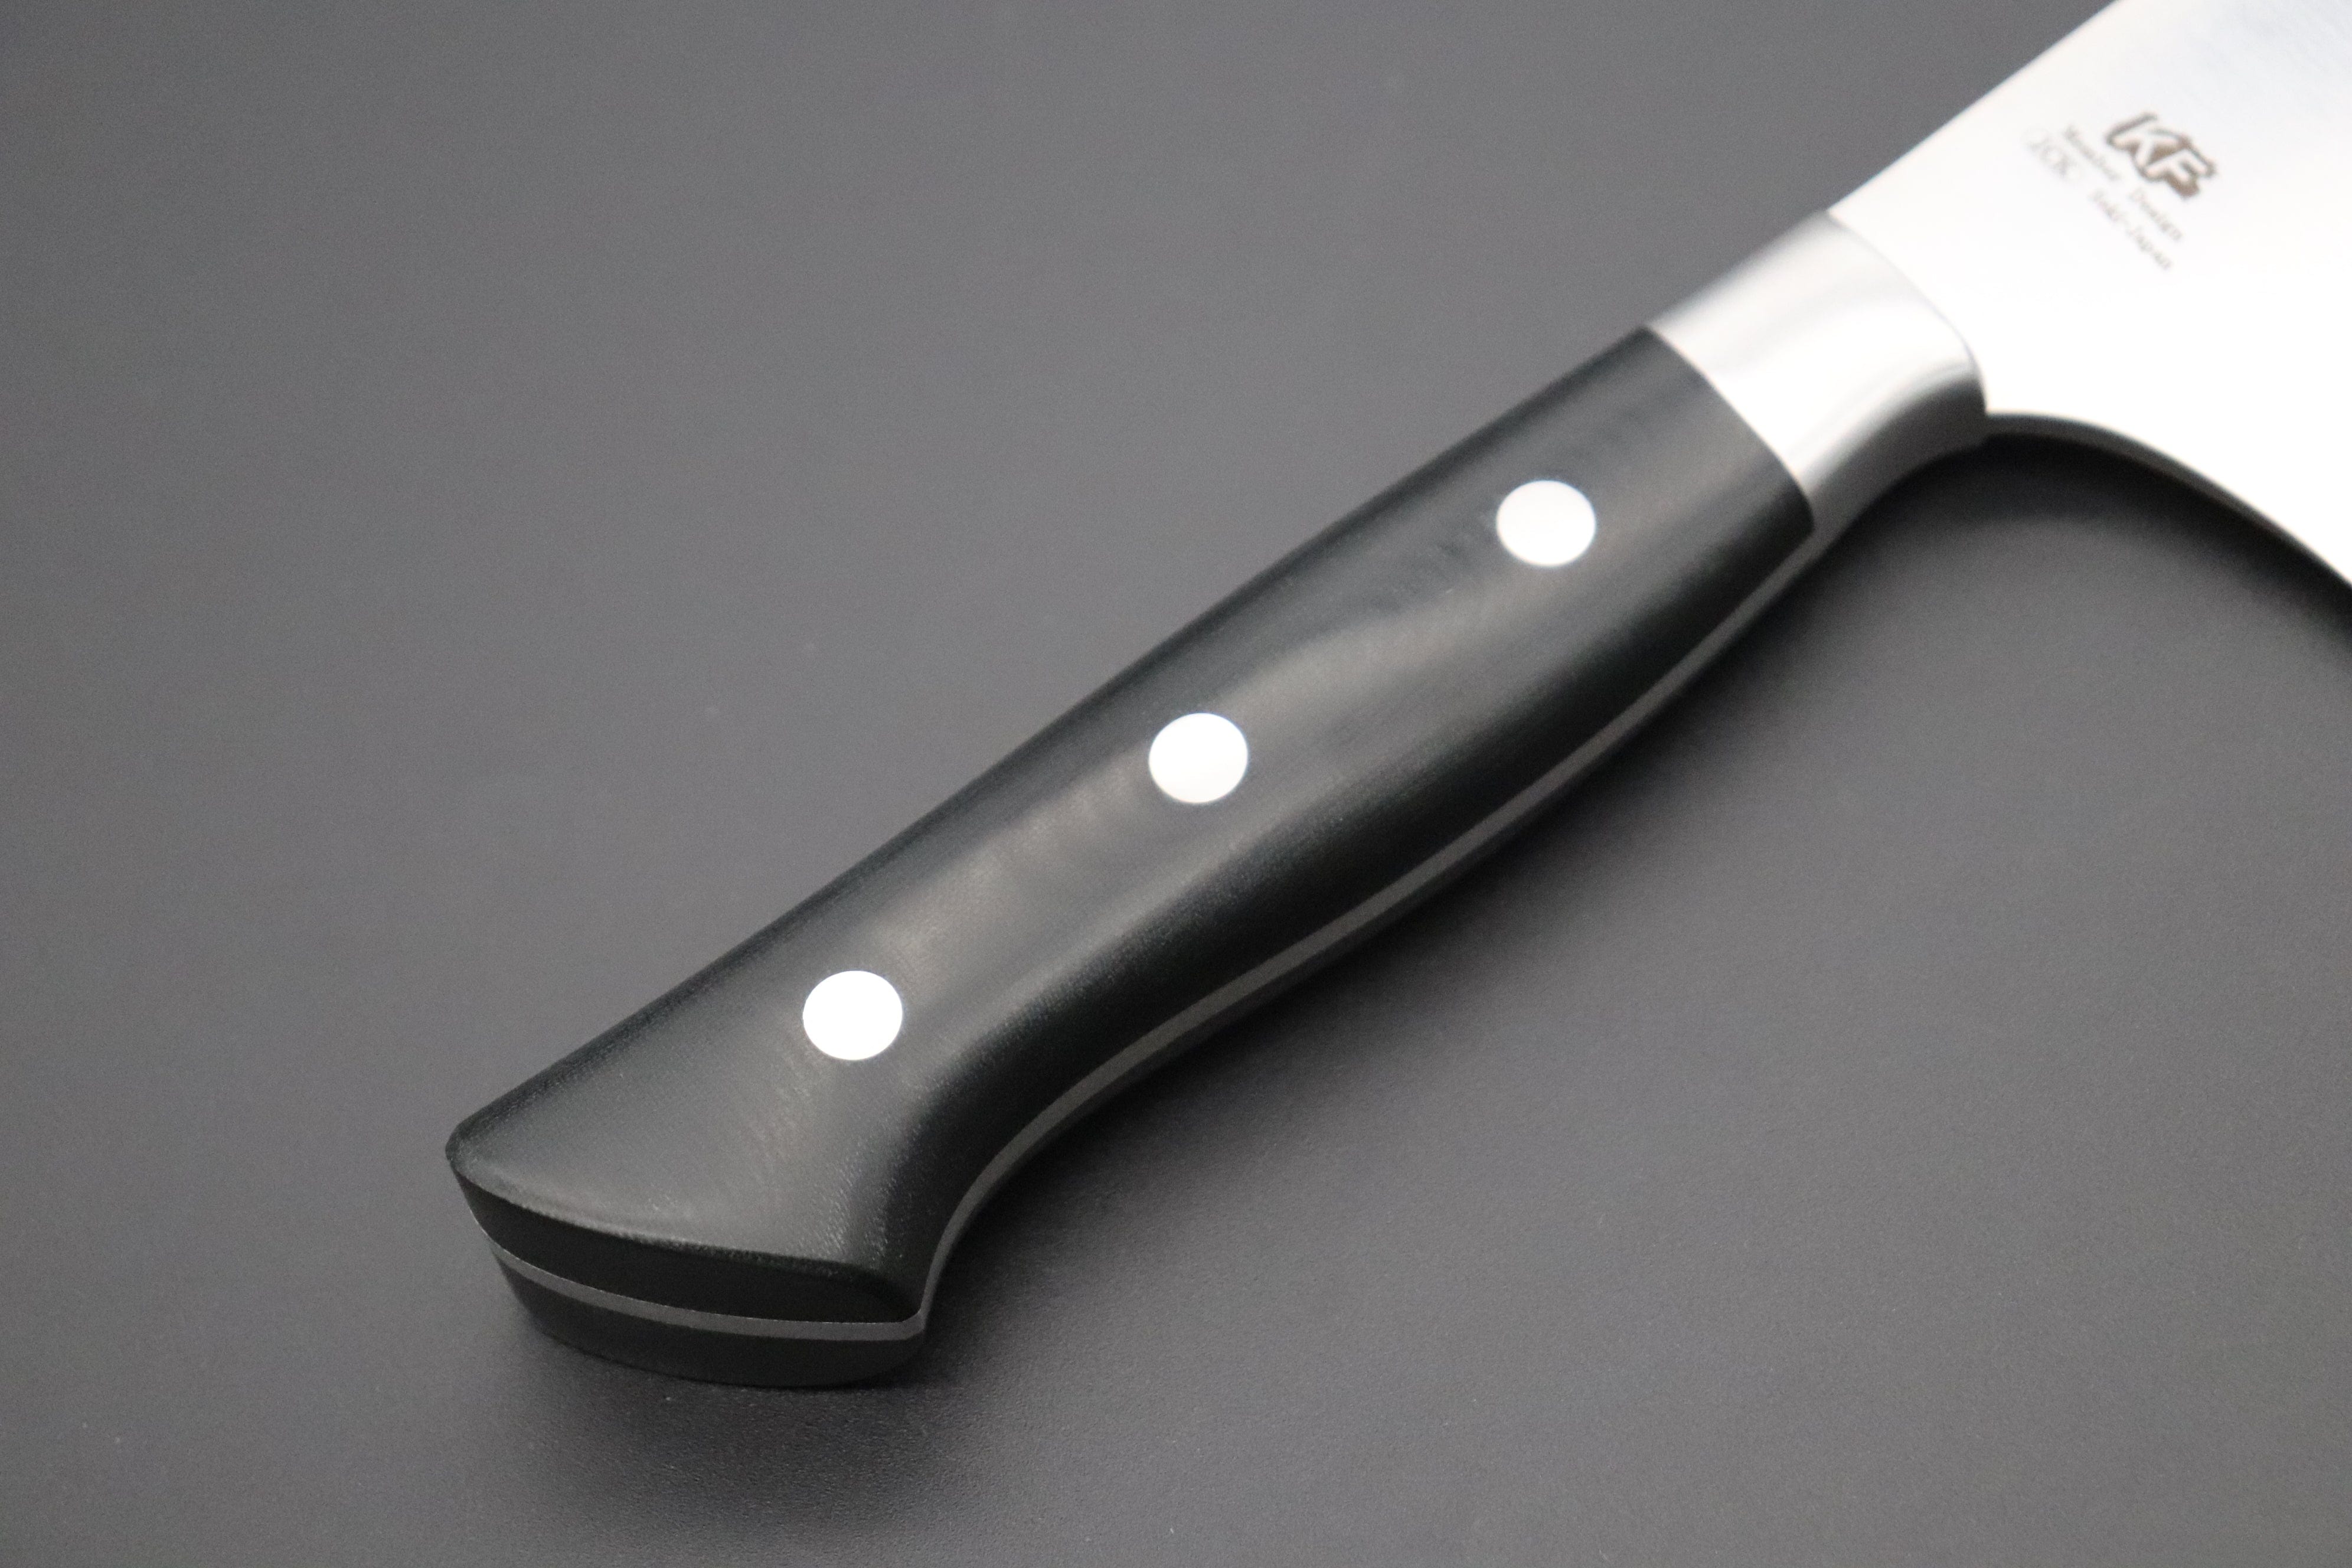 Jck Original Hattori Japanese Chef’s Knife, FH-11L Professional Wester Deba Knife, VG-10 Cobalt Steel Pro Kitchen Knife with Ergonomic Black Linen